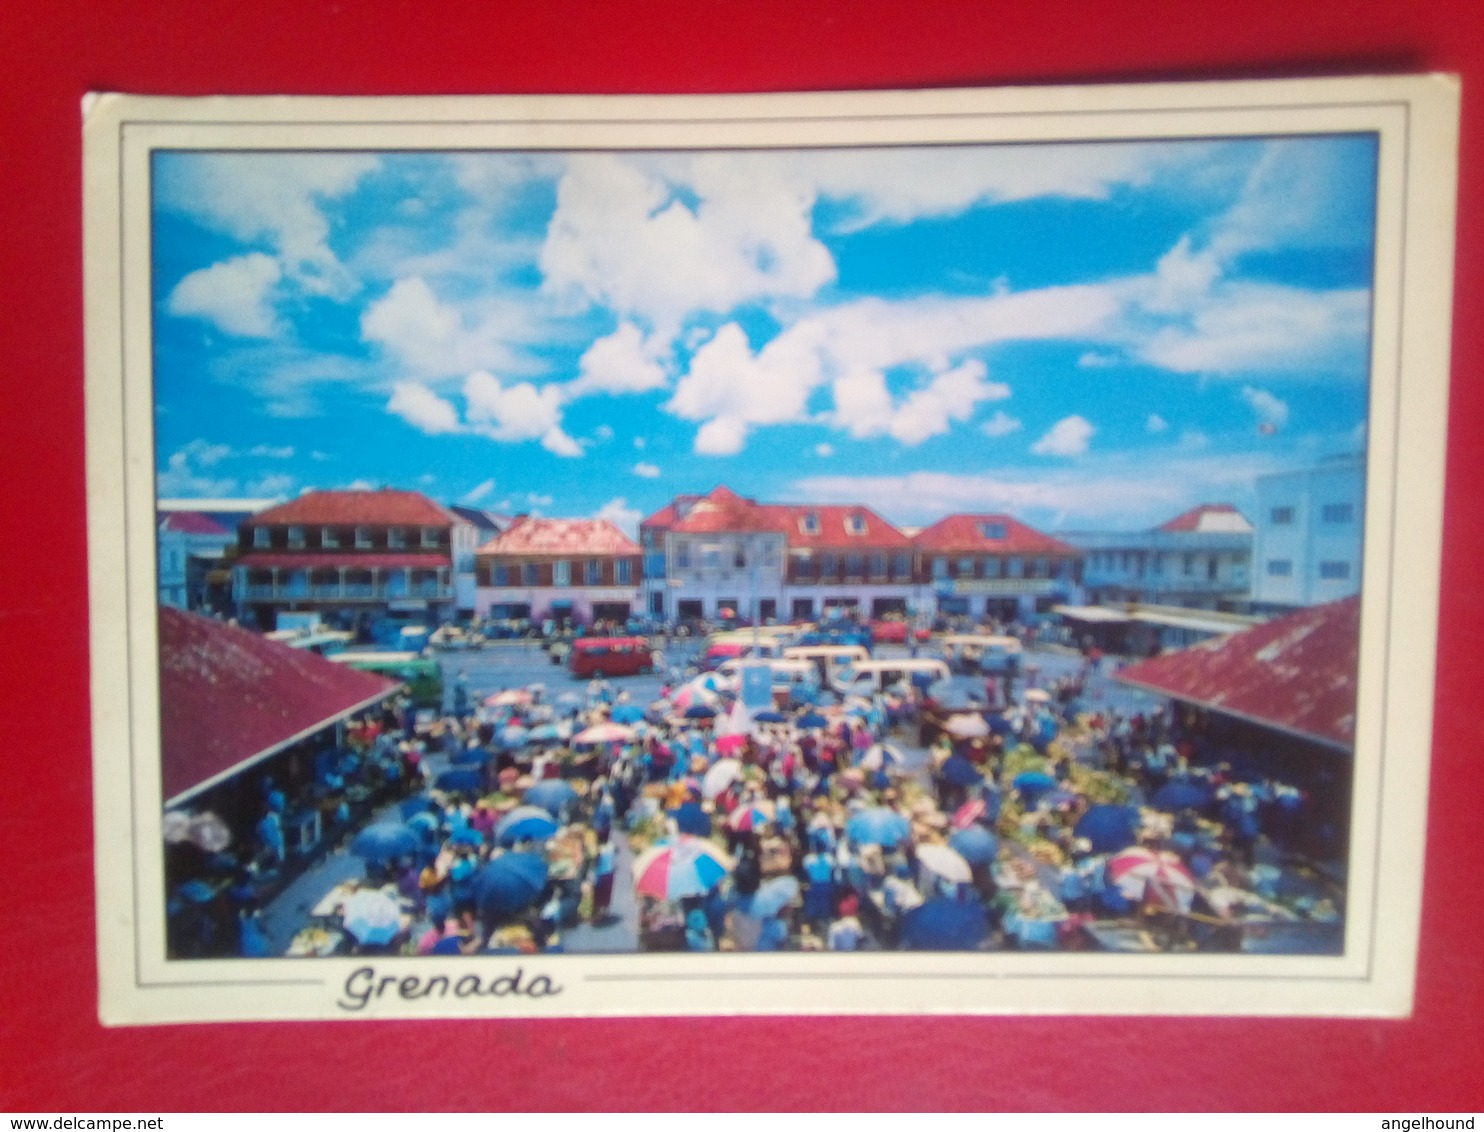 The Market Square, St George's, Grenada - Grenada